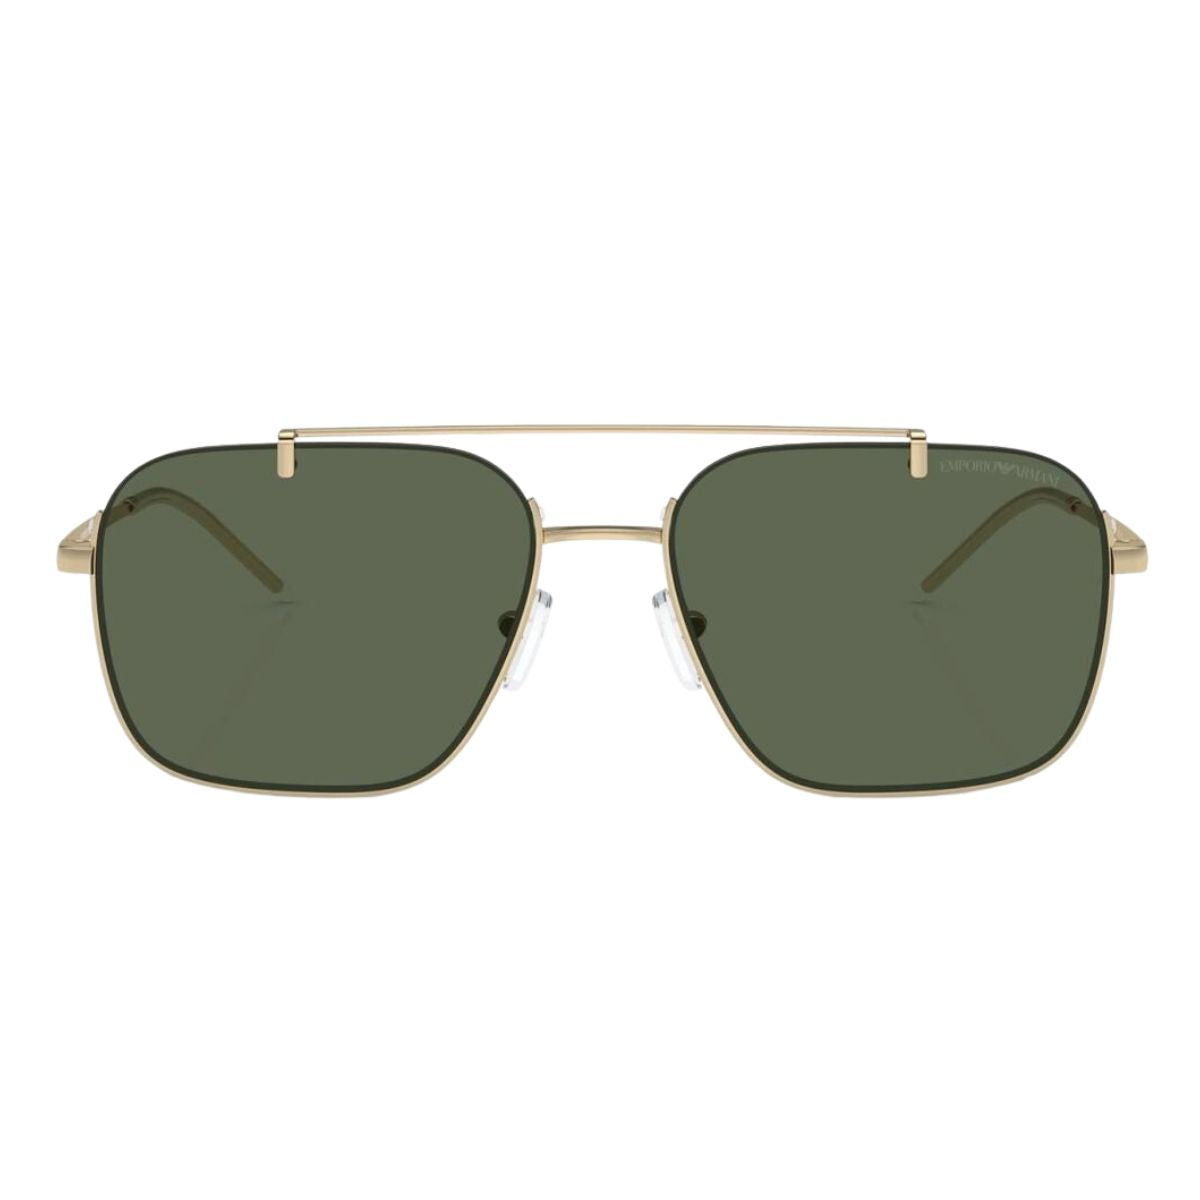 "Stylish Emporio Arman Square Sunglasses For Men's | Optorium"